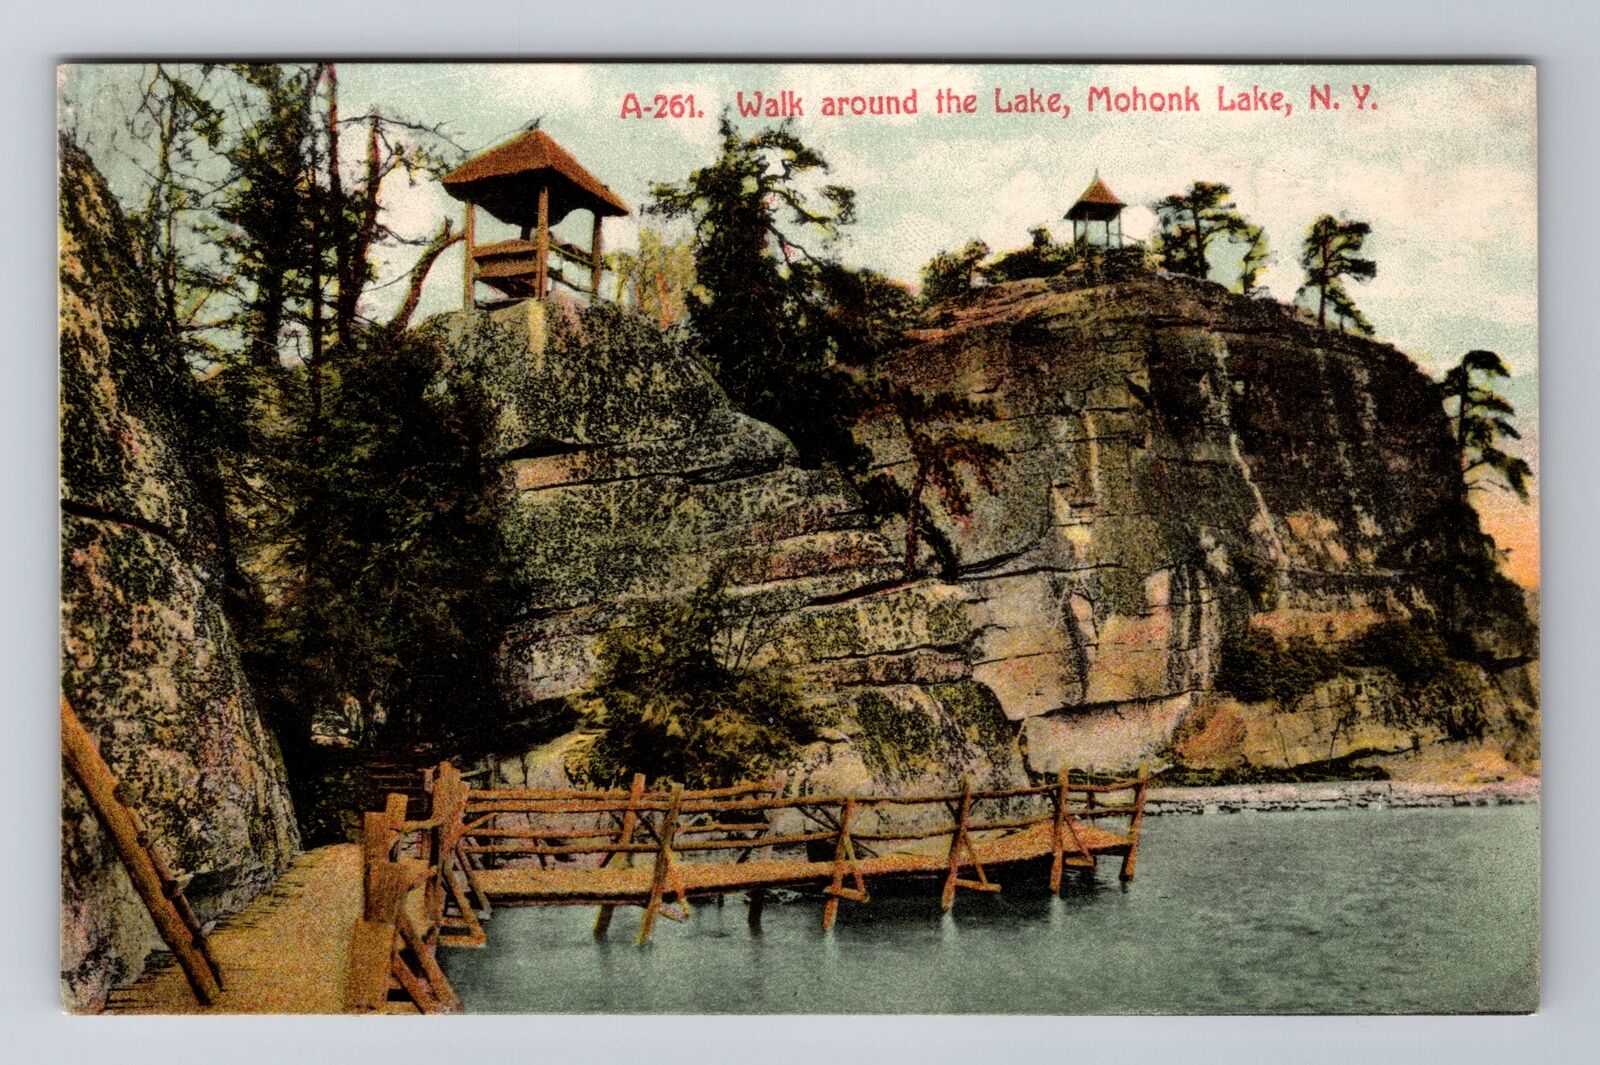 Mohonk Lake NY-New York, Walk Around The Lake, Antique Souvenir Vintage Postcard